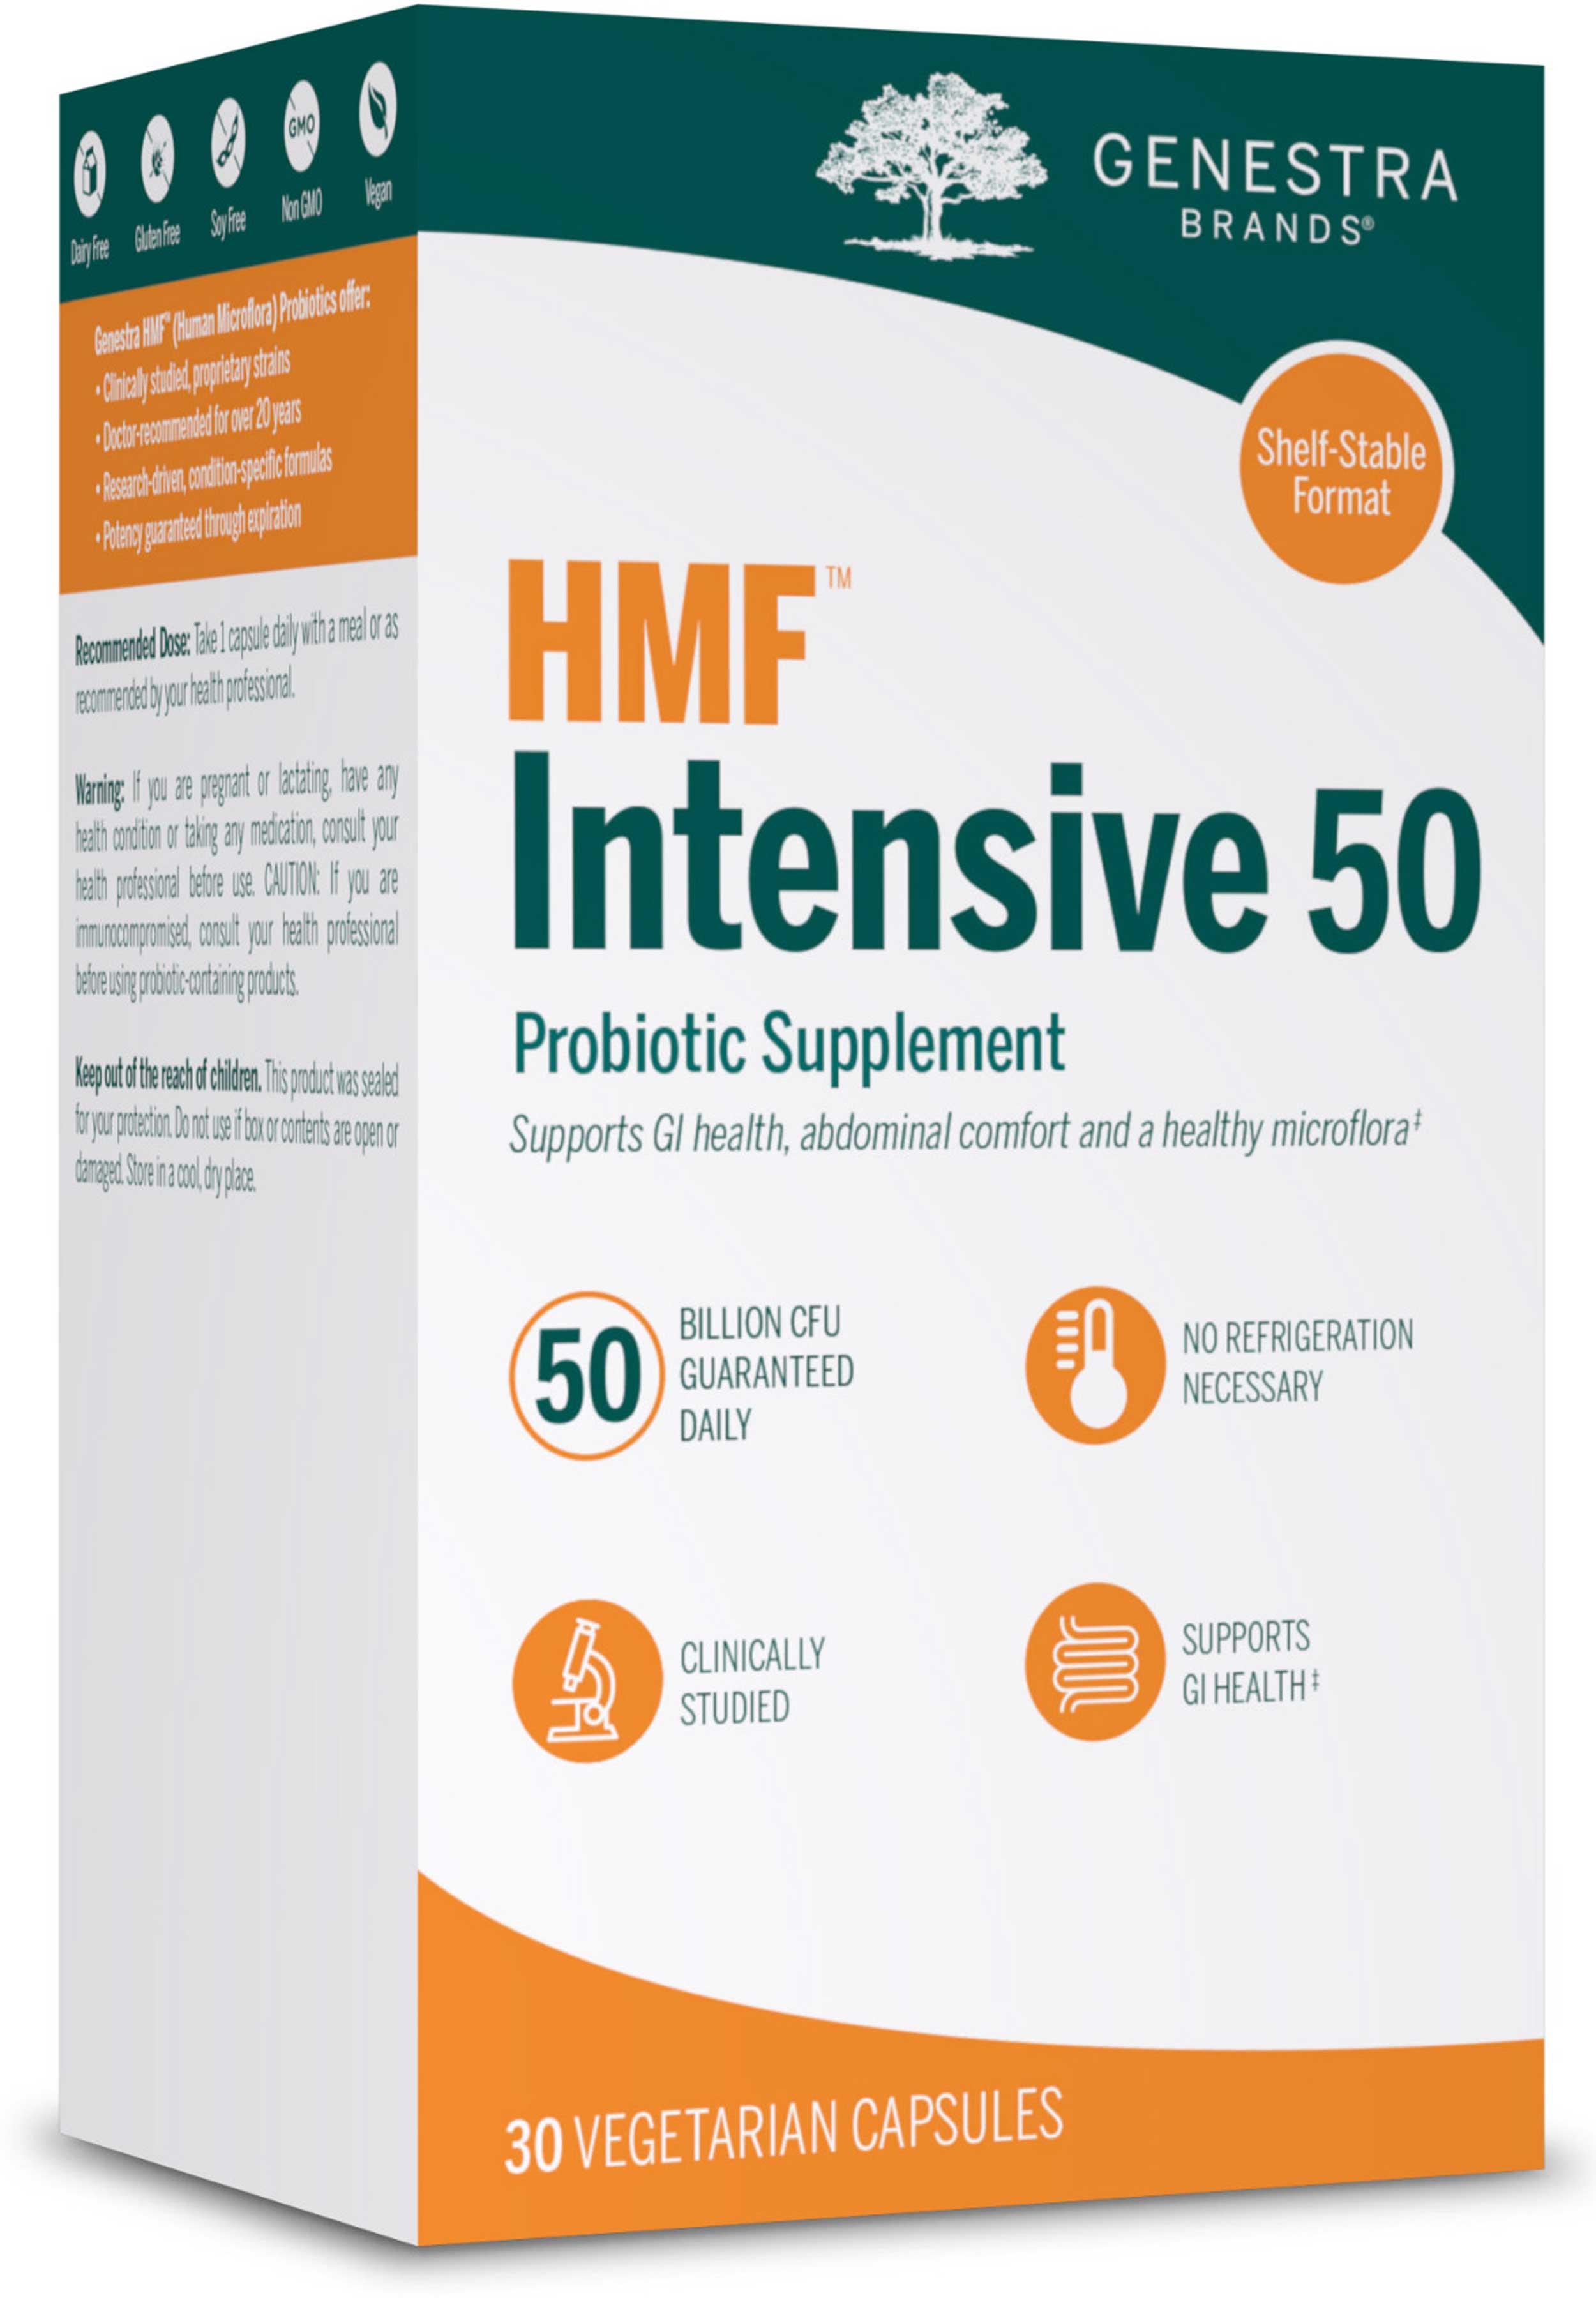 Genestra Brands HMF Intensive 50